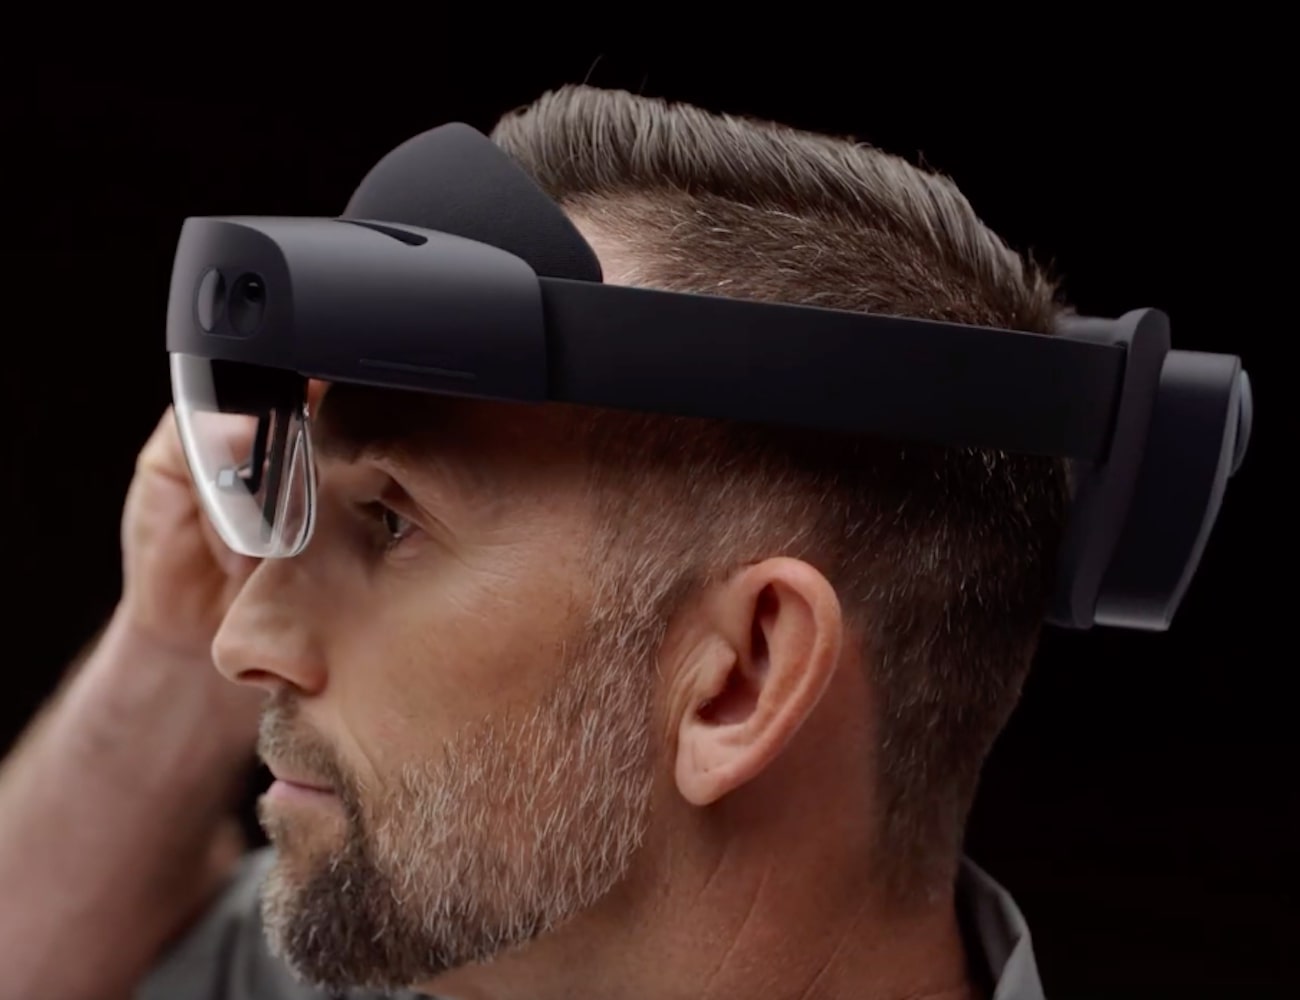 Microsoft HoloLens 2 Advanced Mixed Reality Headset helps you work smarter